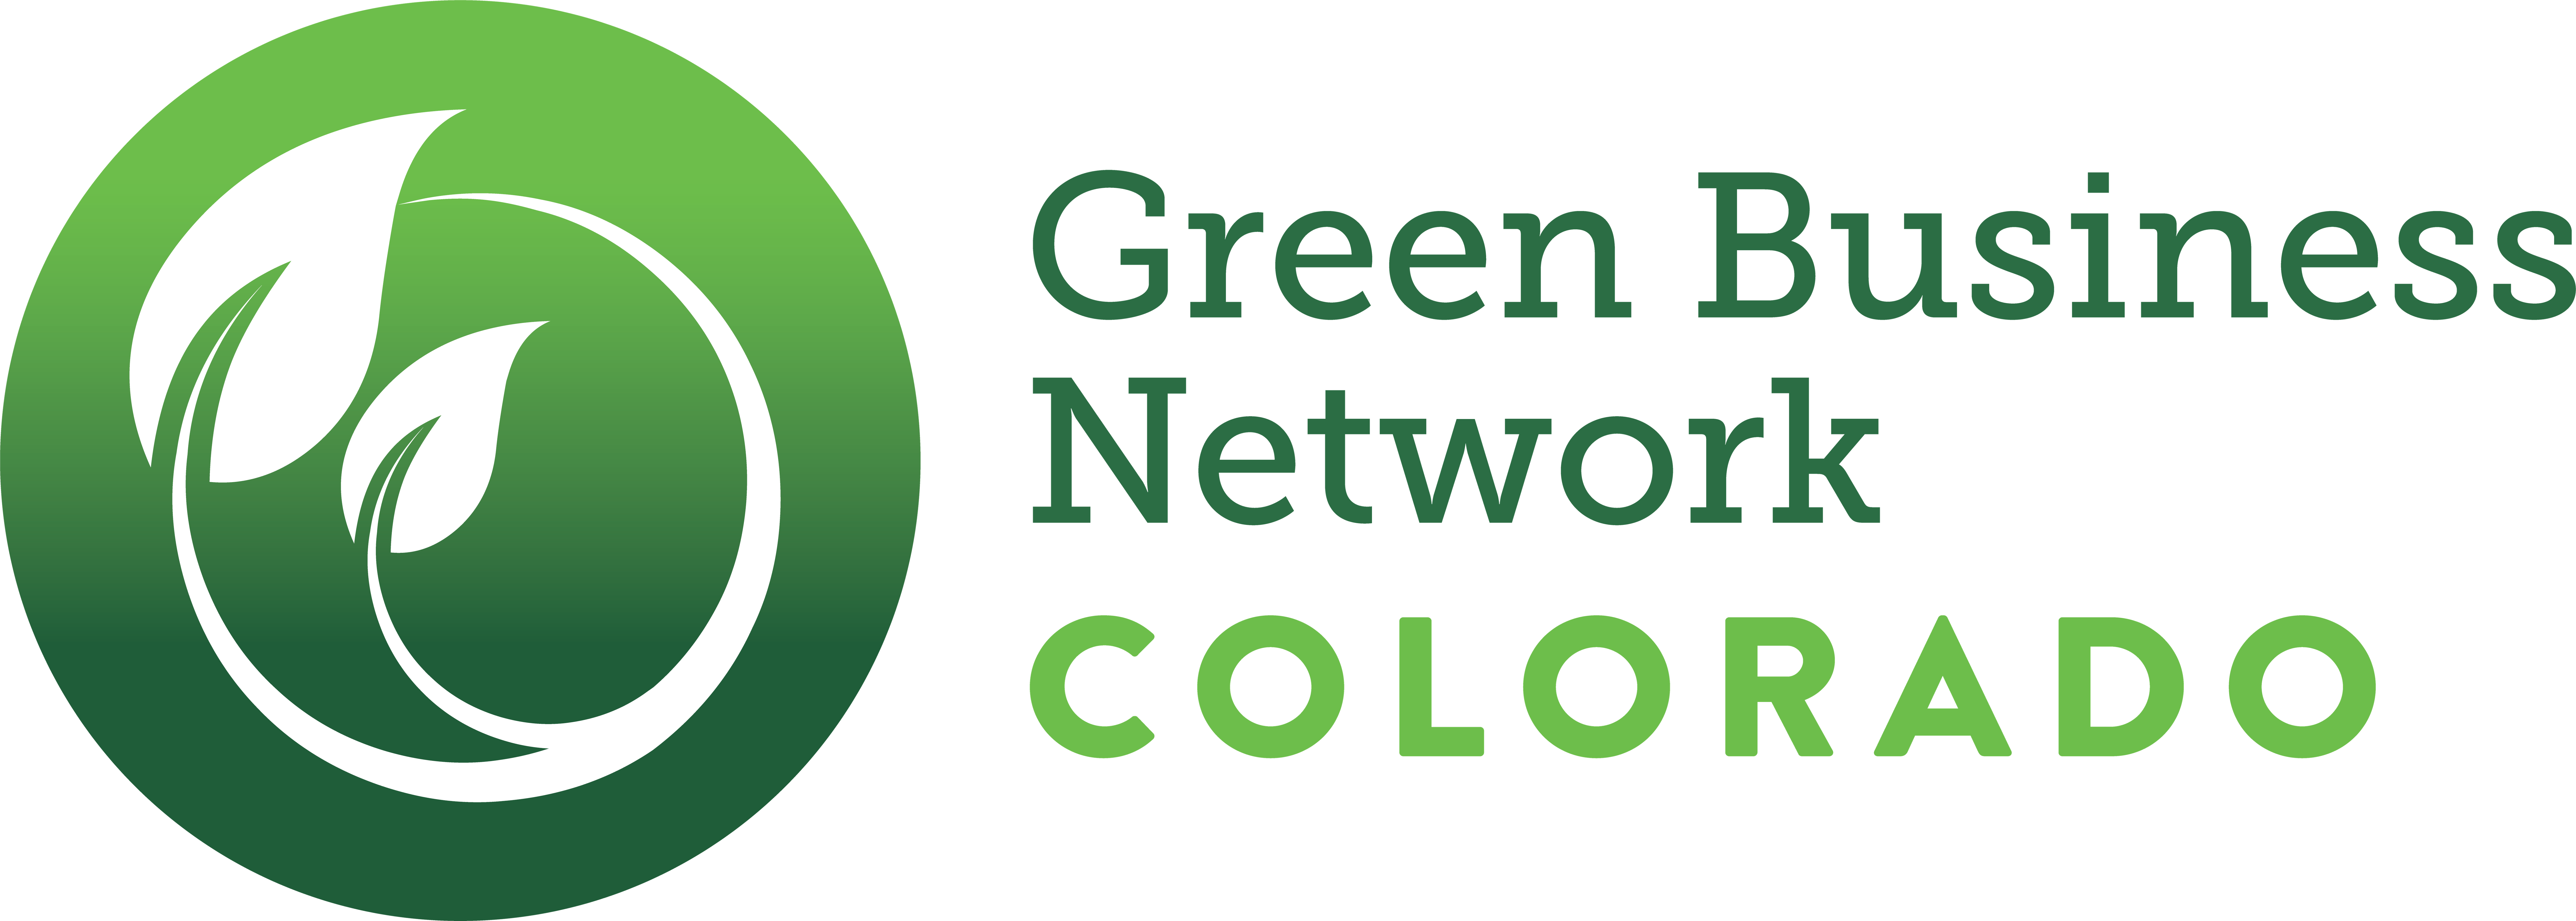 Colorado Green Business Network Logo